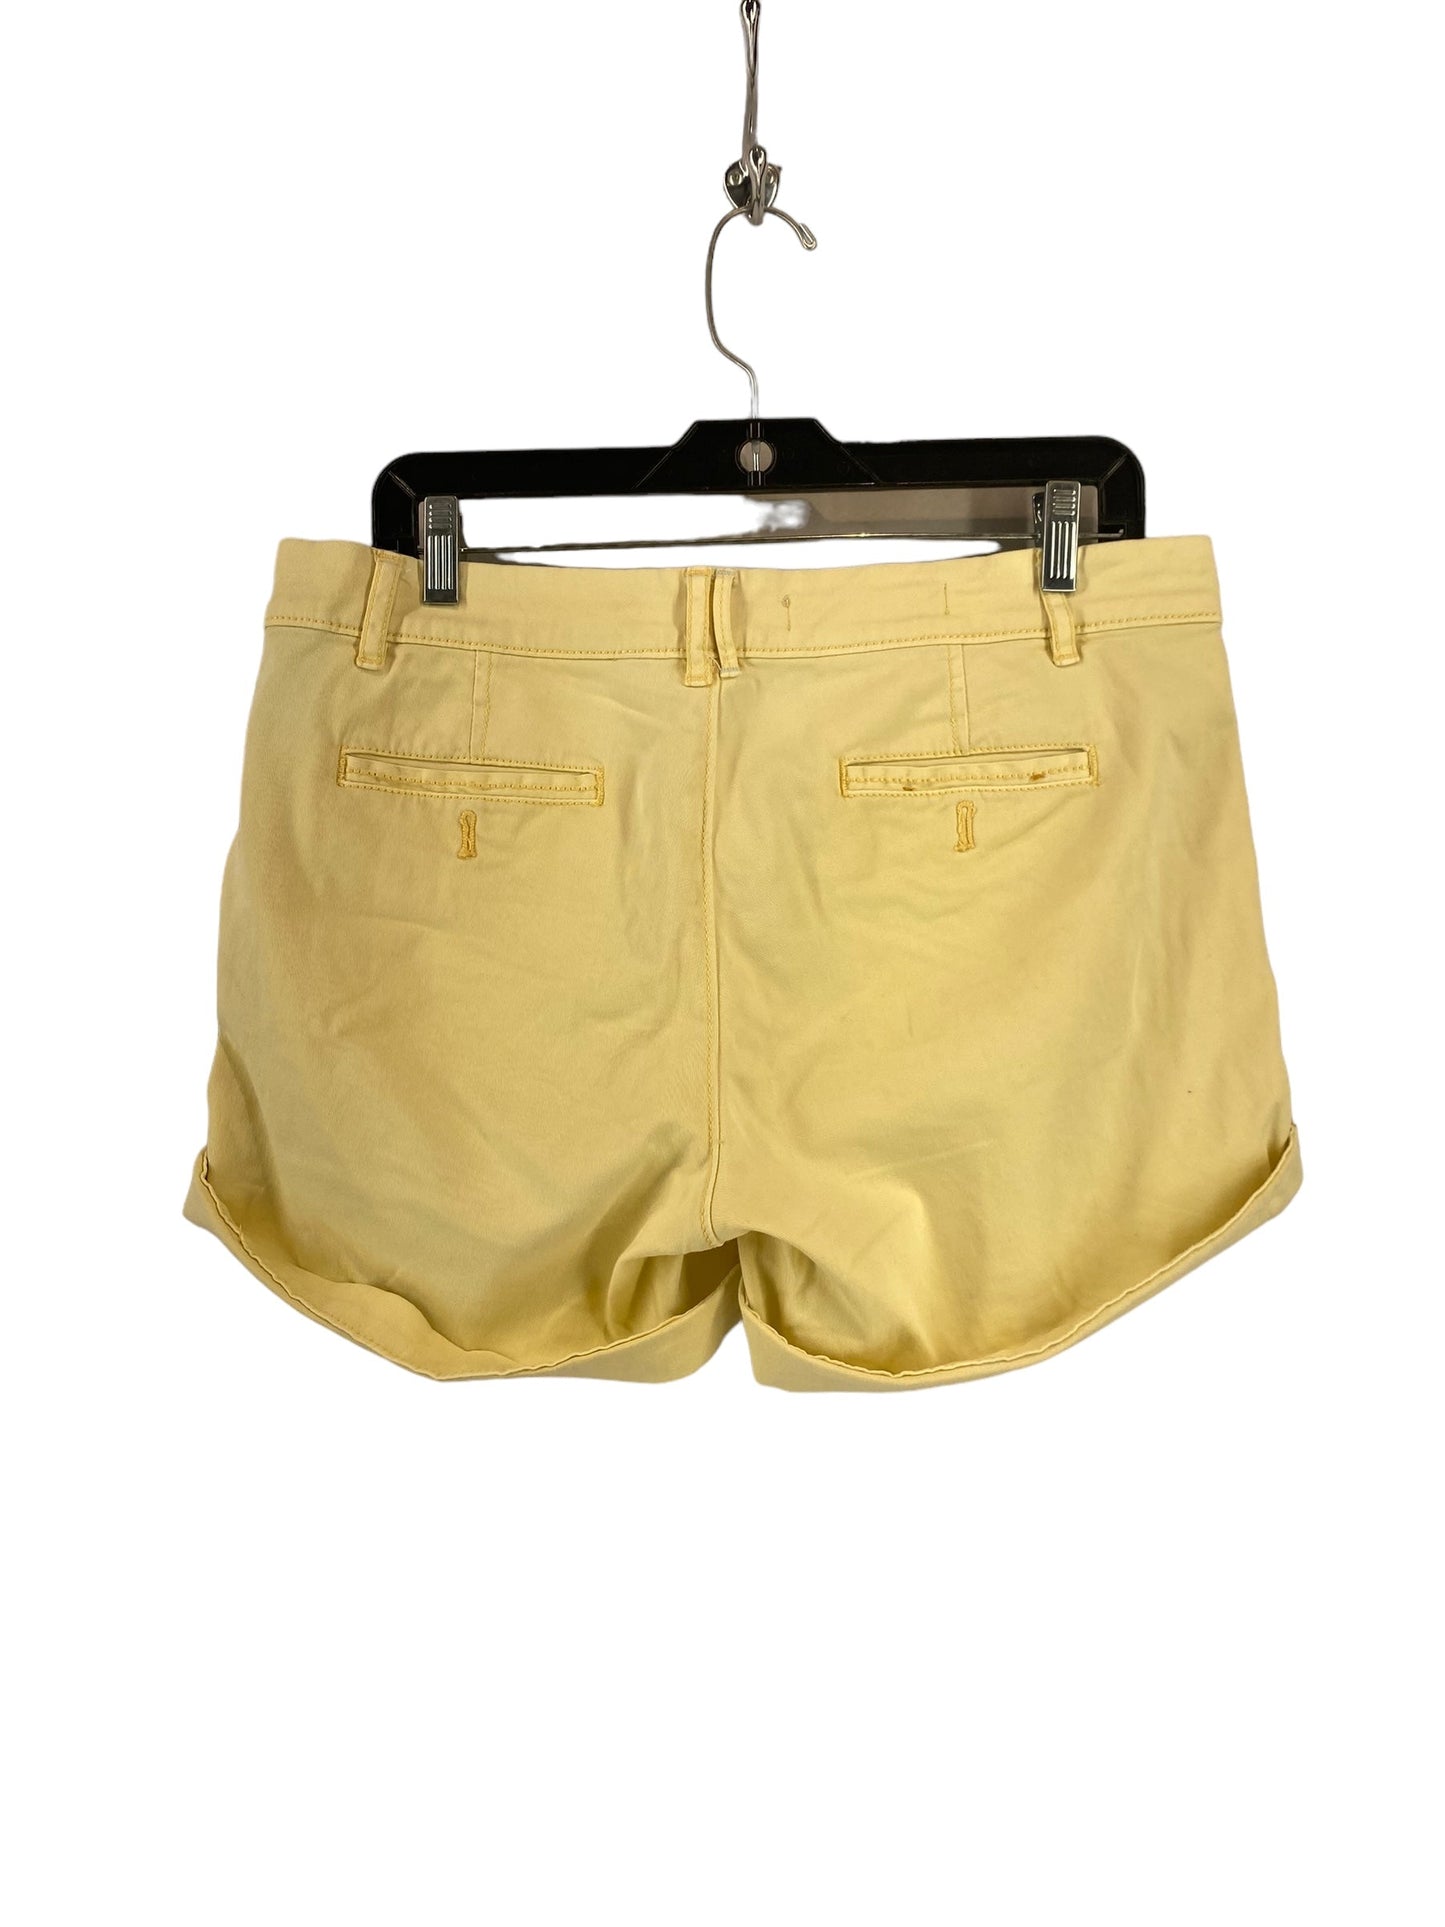 Yellow Shorts Pilcro, Size 29